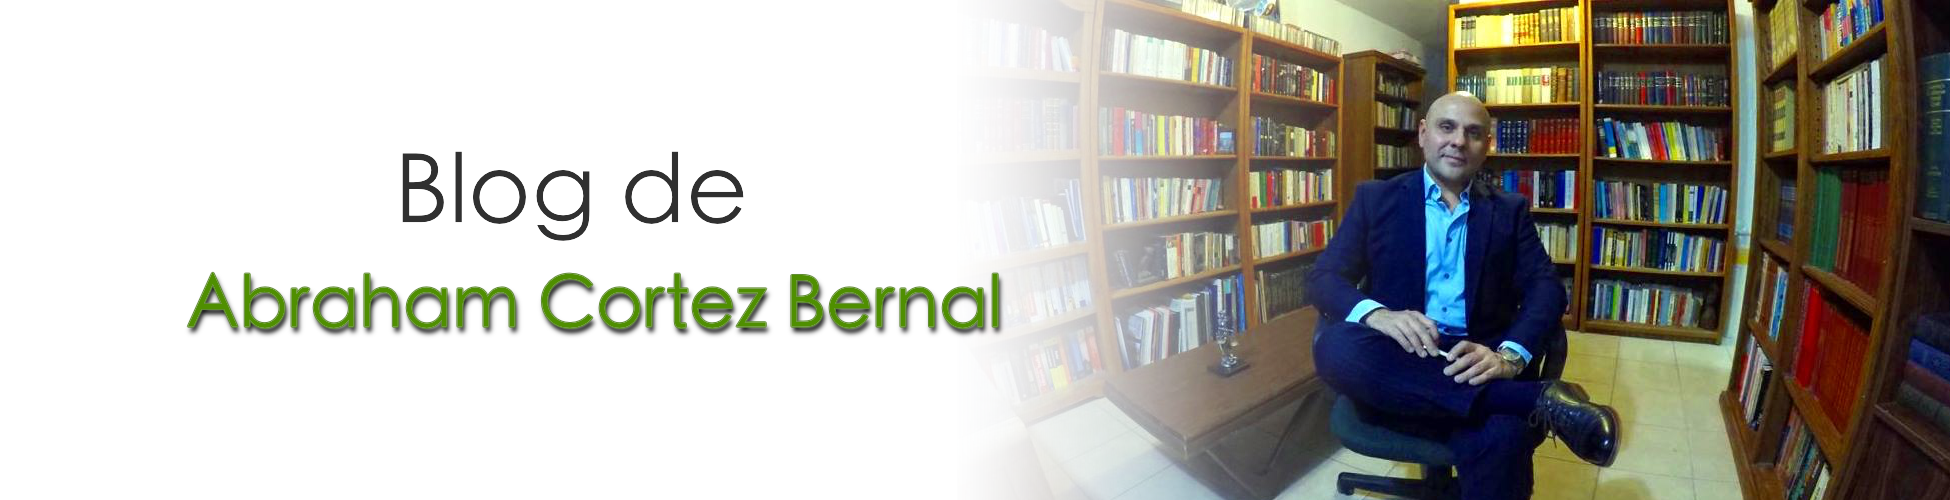 Abraham Cortez Bernal Blog Derecho Penal Y Política Criminal 3104